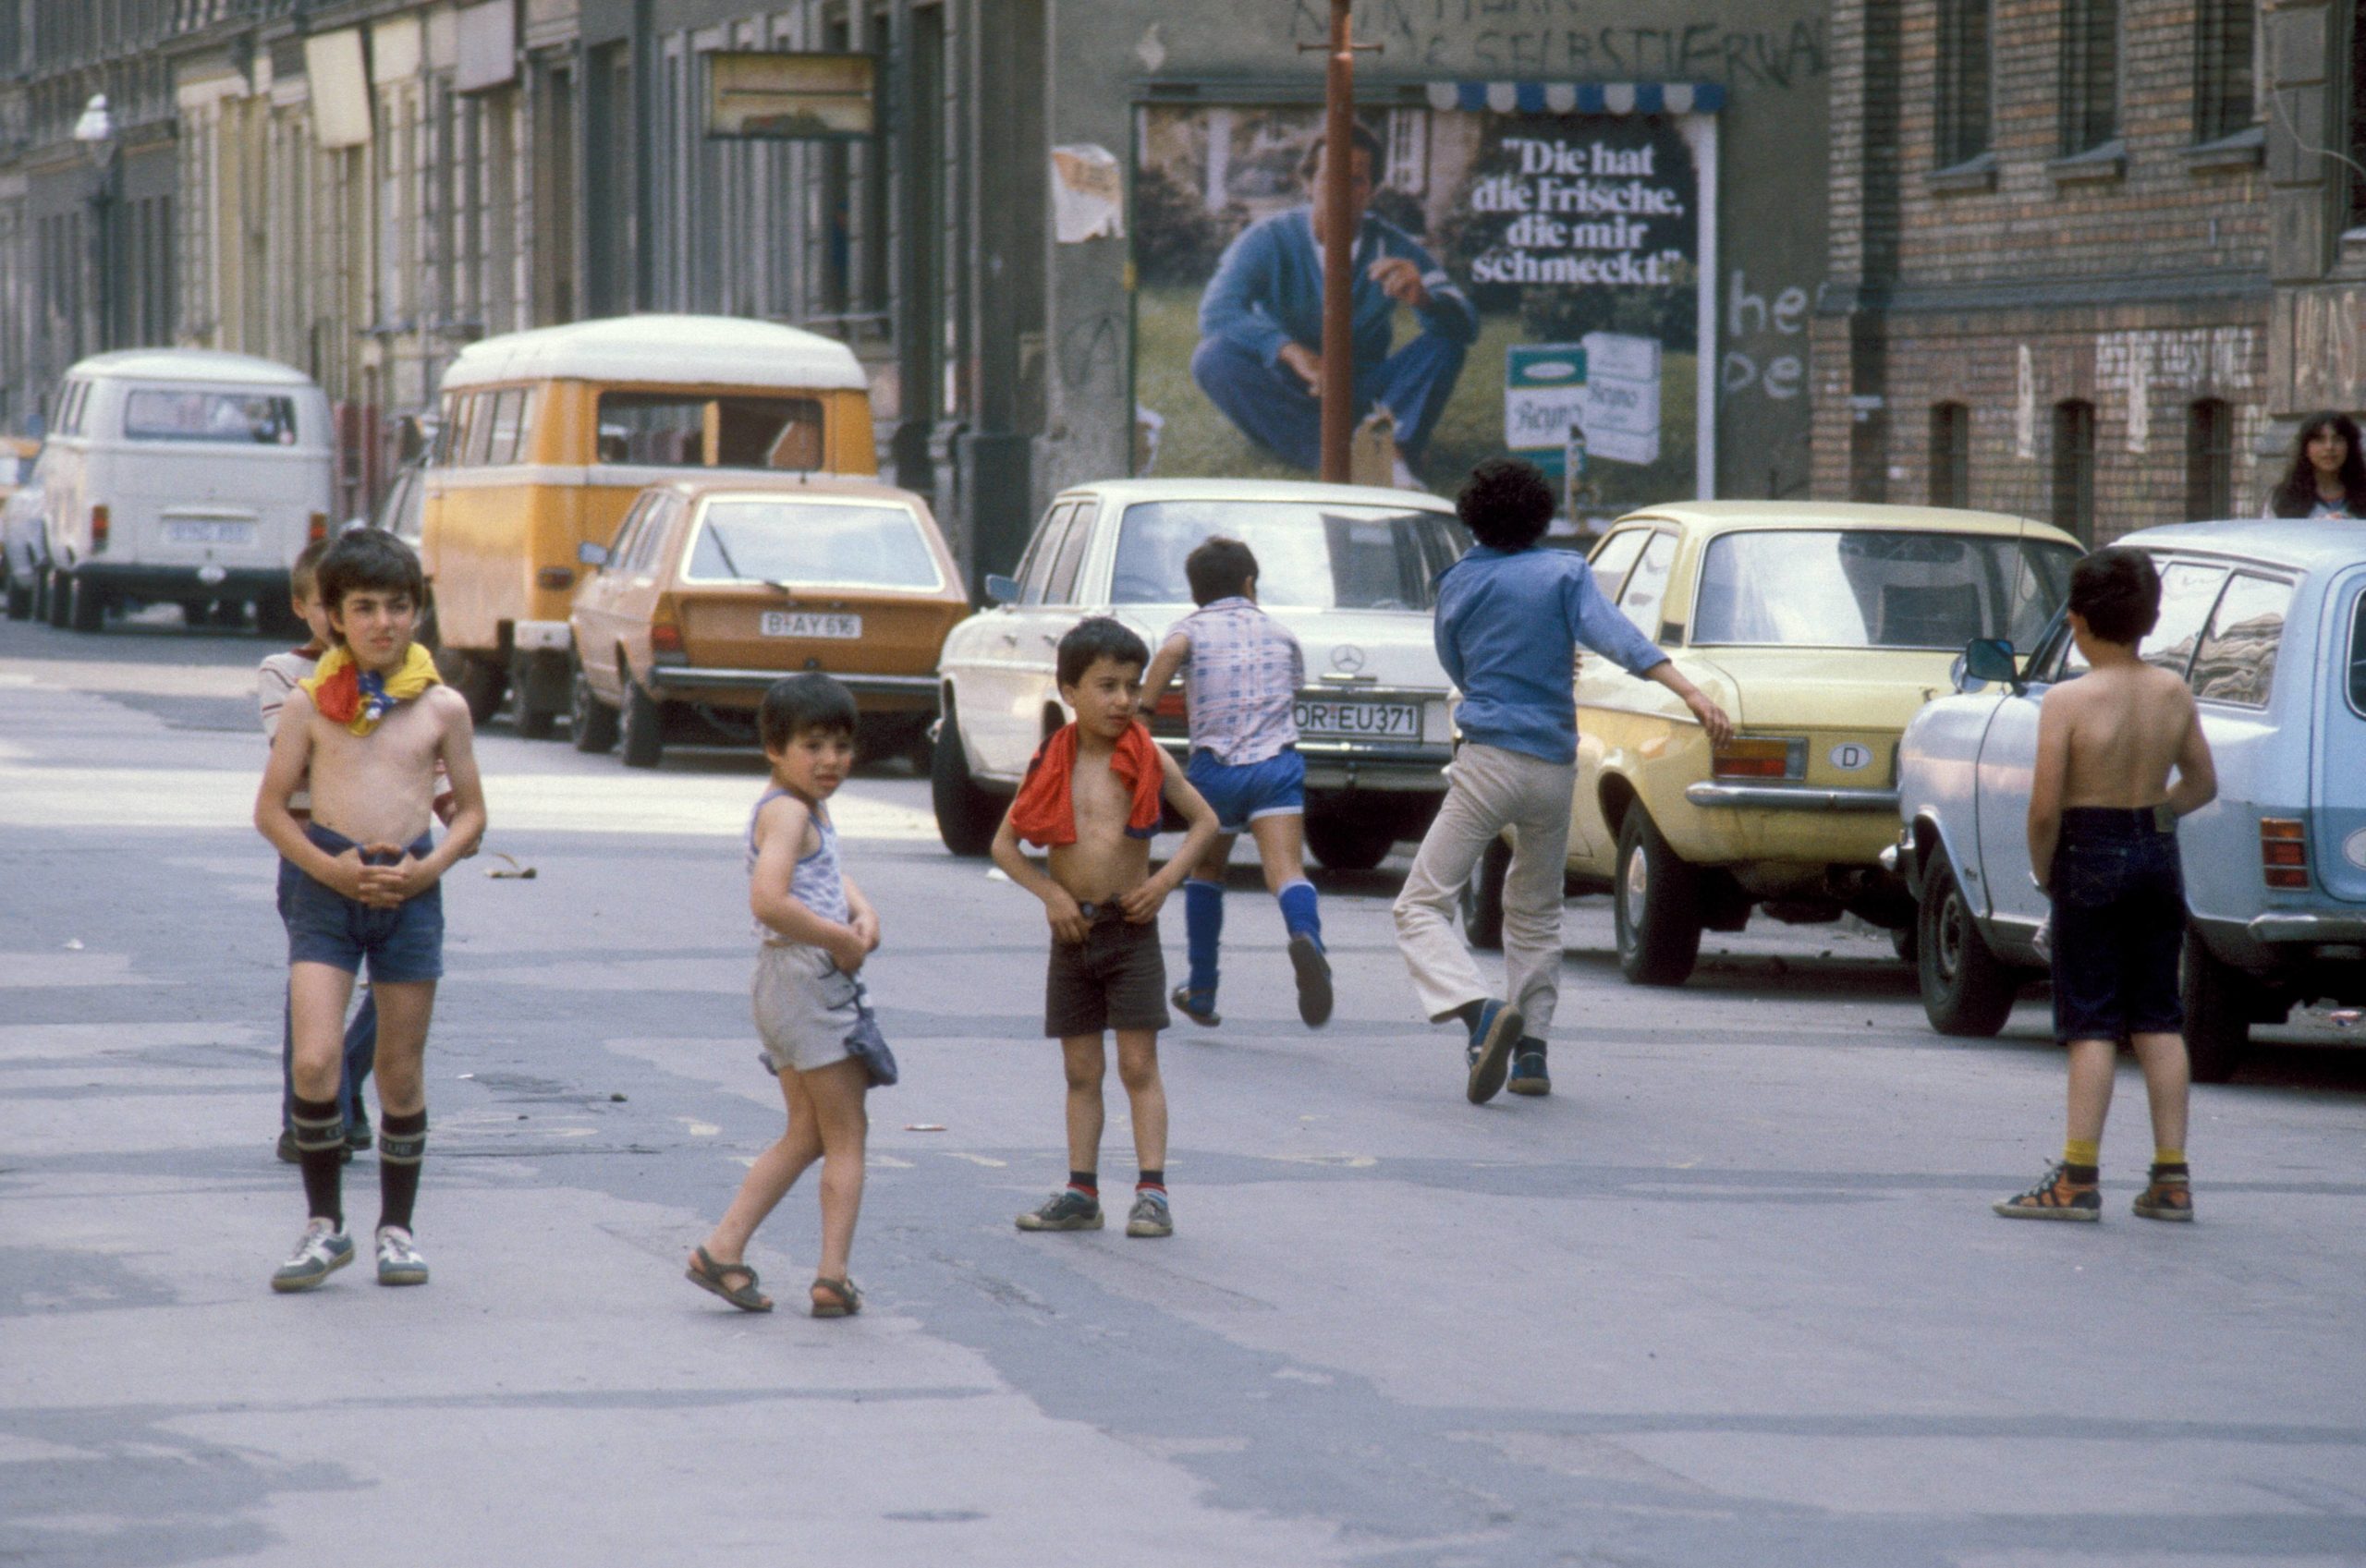 Auf der Straße spielende Kinder in Kreuzberg, frühe 1980er-Jahre. Foto: Imago/Sven Simon